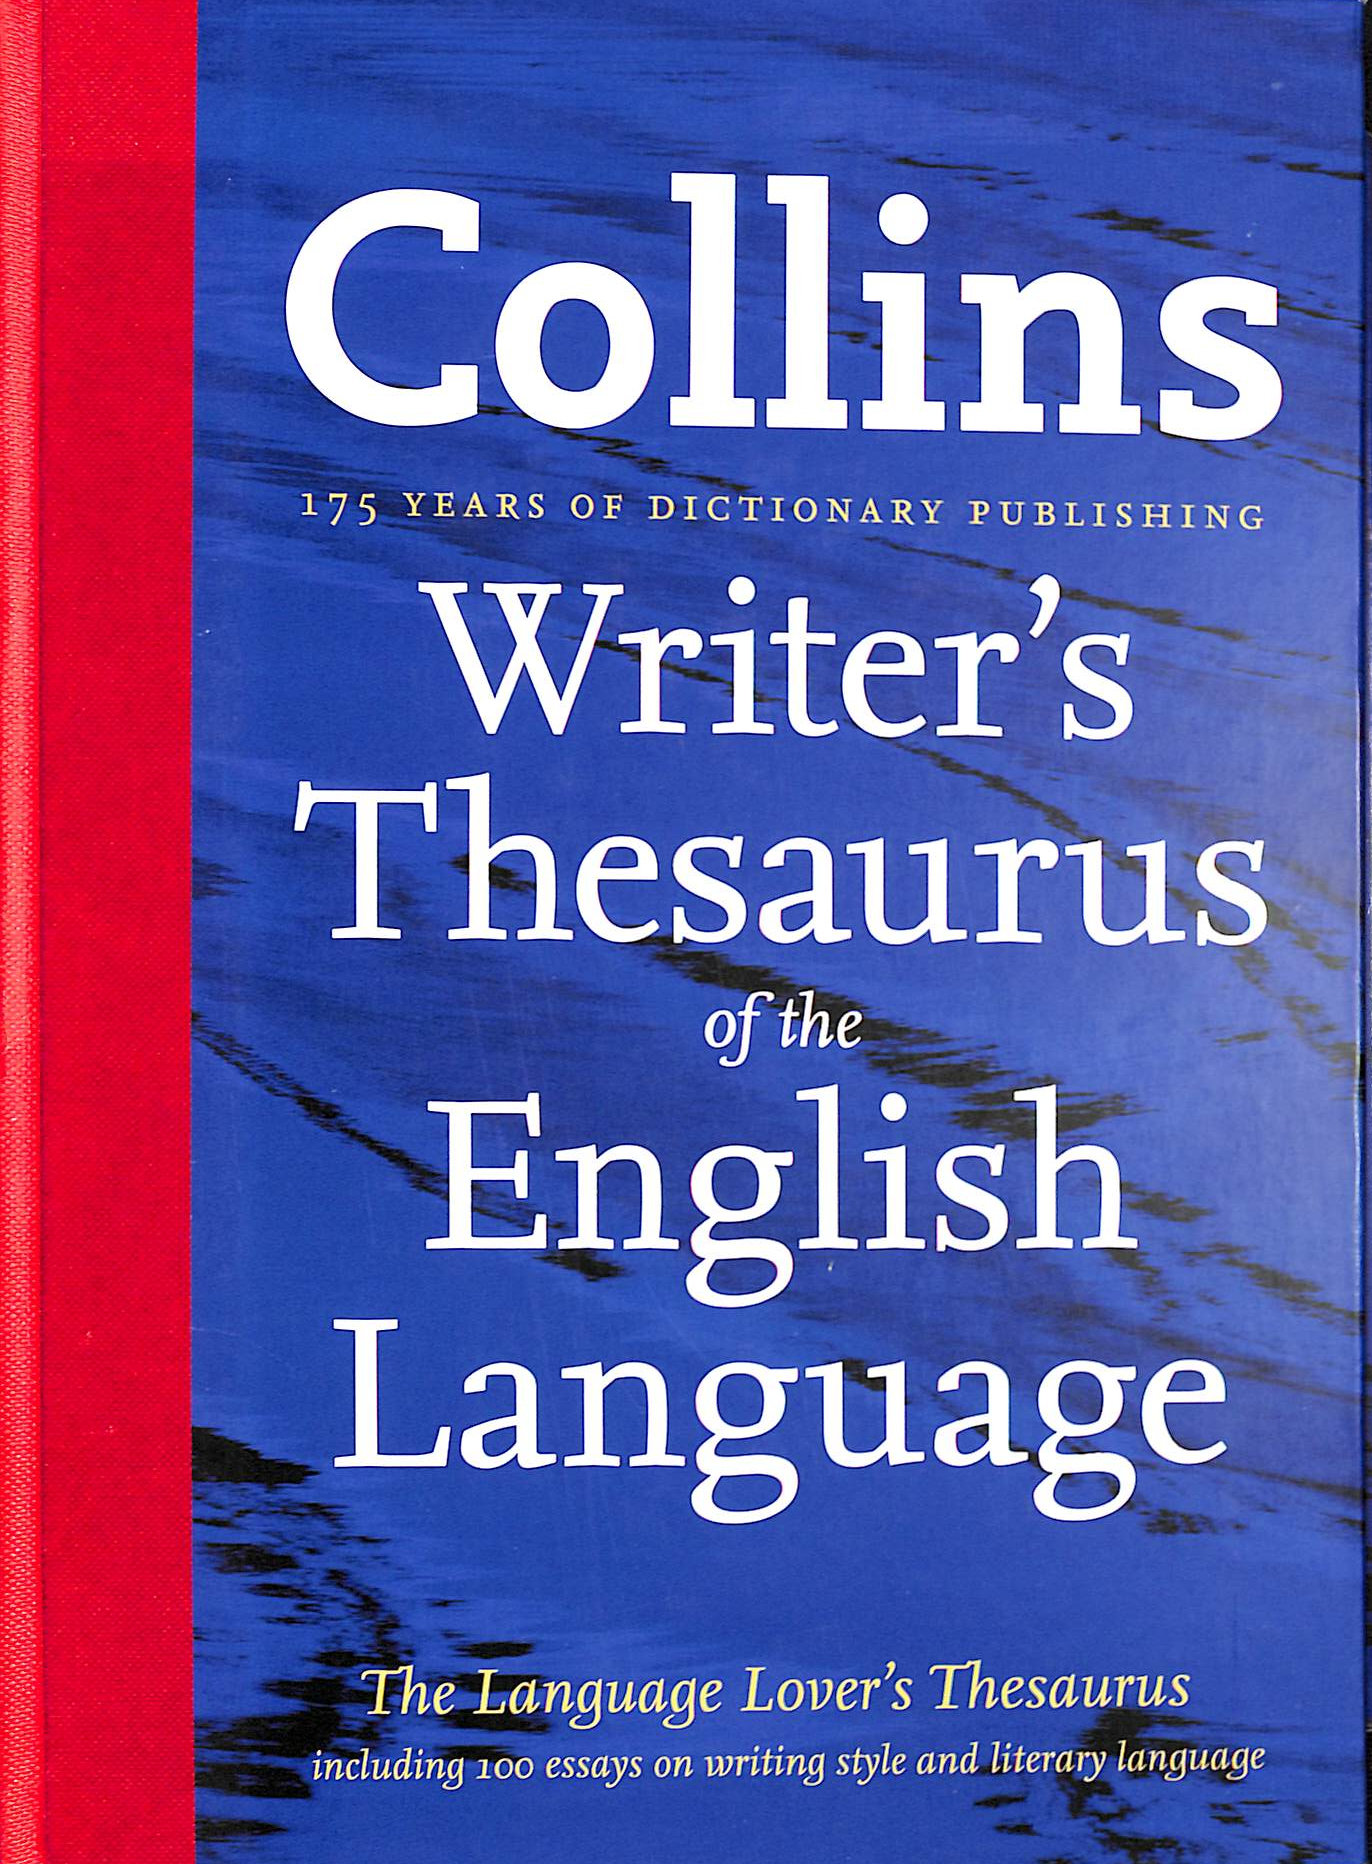 VARIOUS - Collins Writer's Thesaurus of the English Language